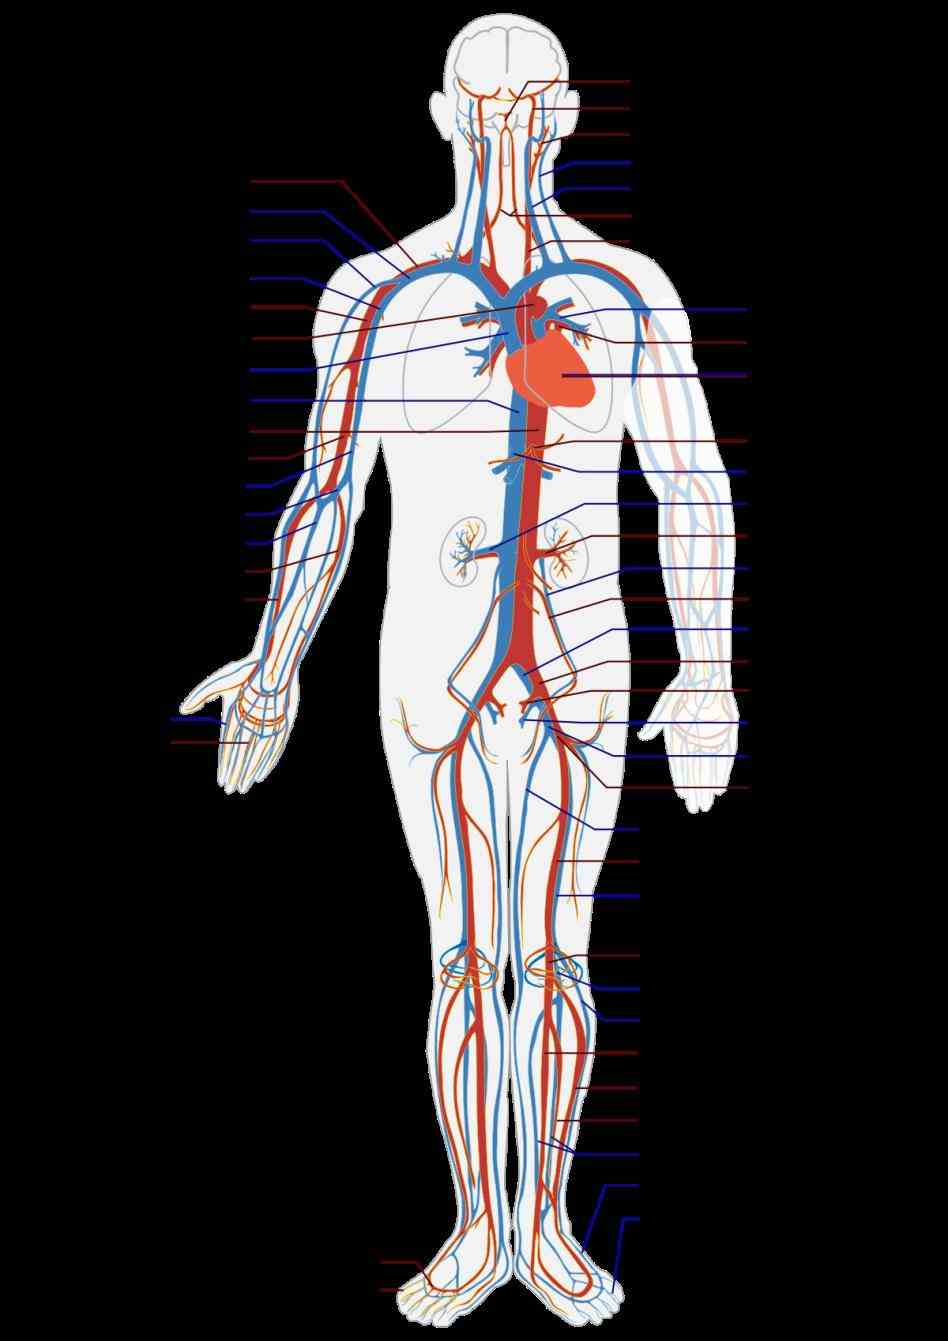 Arteries And Veins Anatomy Diagram | MedicineBTG.com